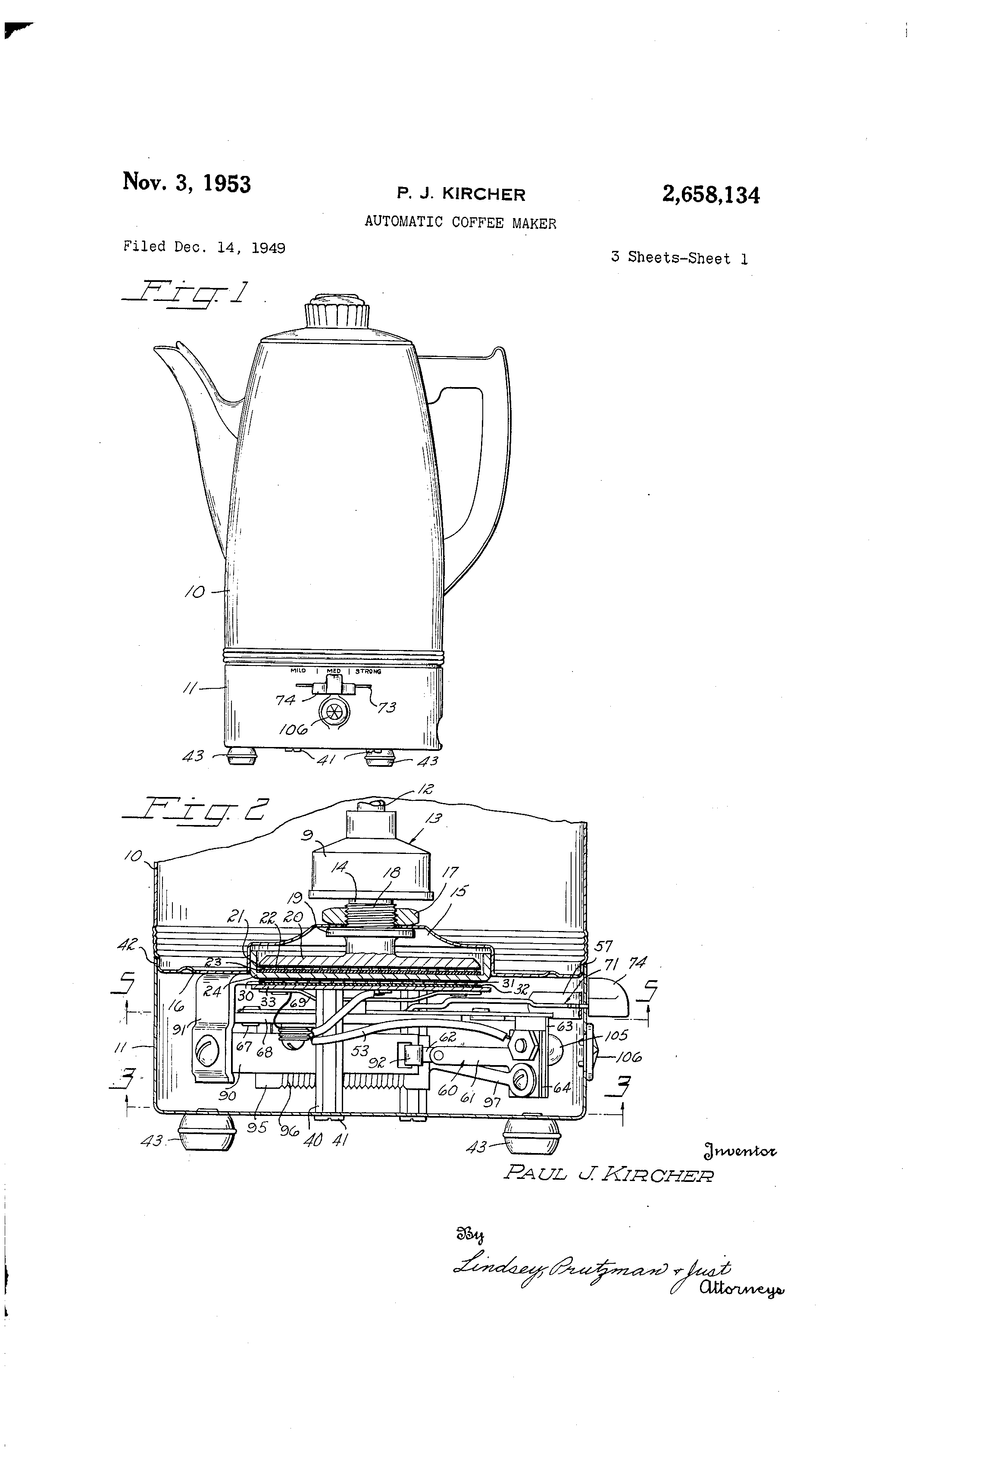 P.J. Kircher, Automatic Coffee Maker, 1953, US2658134